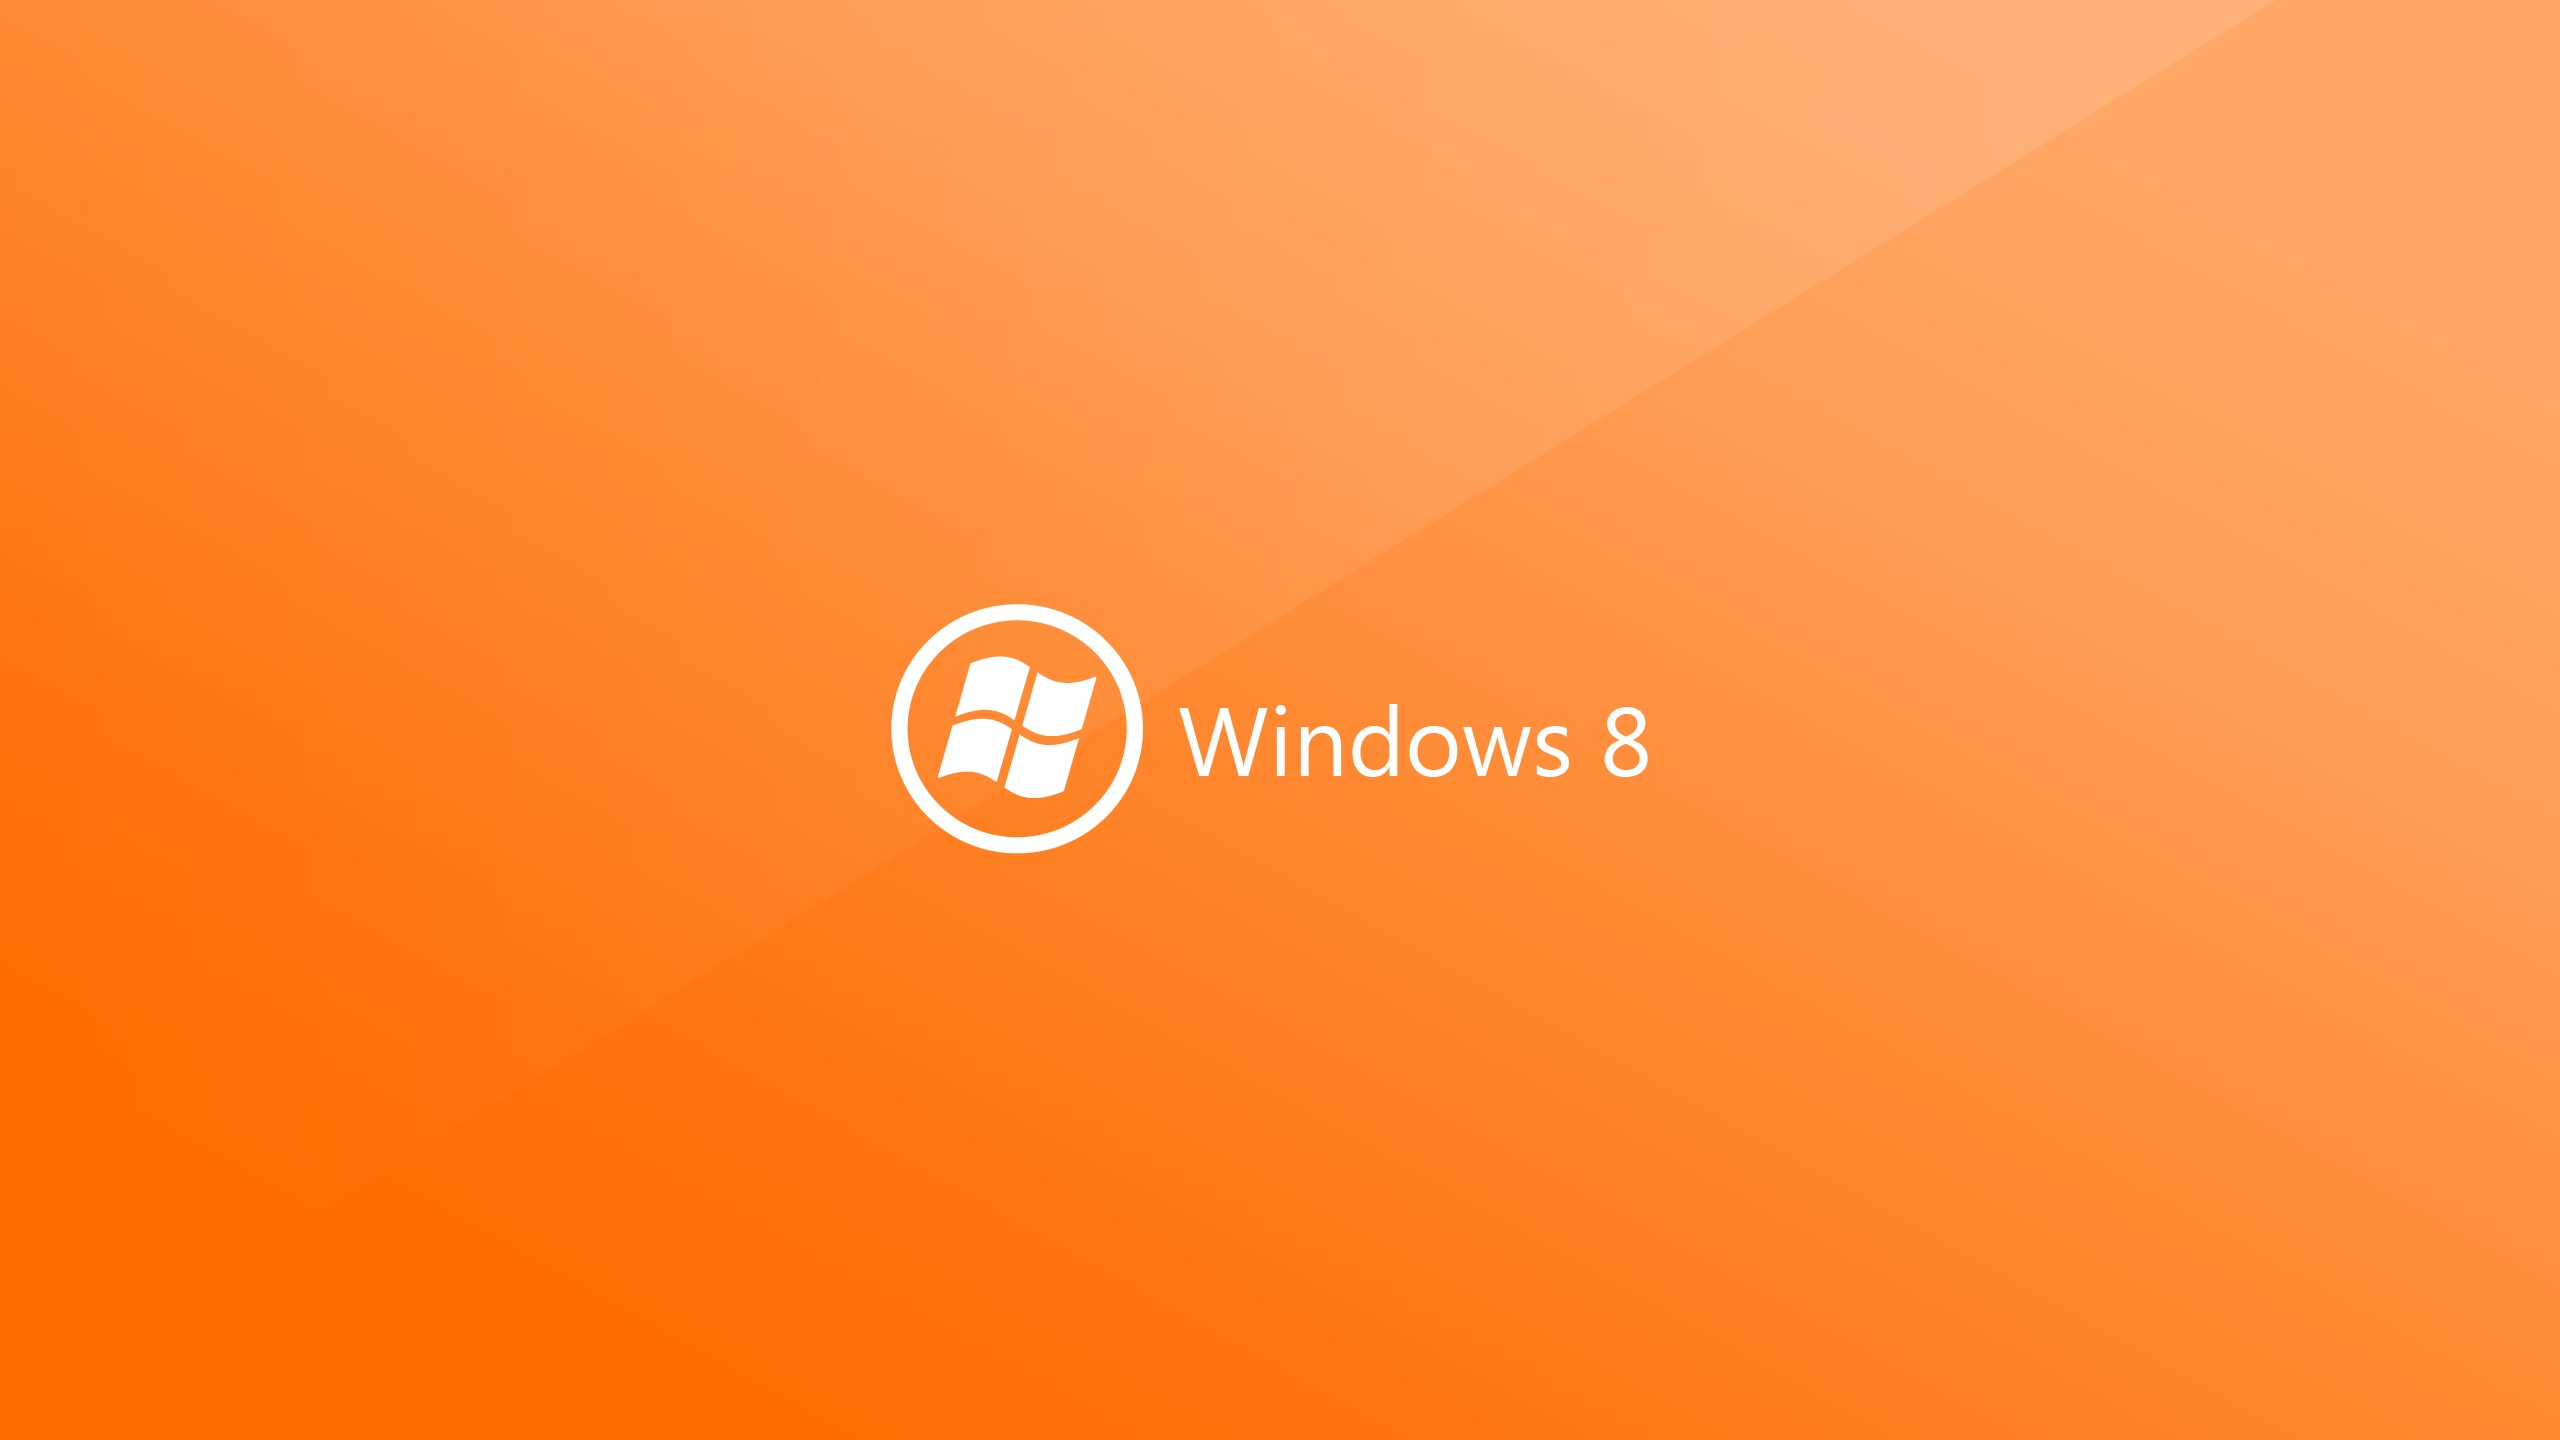 General 2560x1440 Windows 8 Microsoft Windows simple background gradient orange background logo operating system